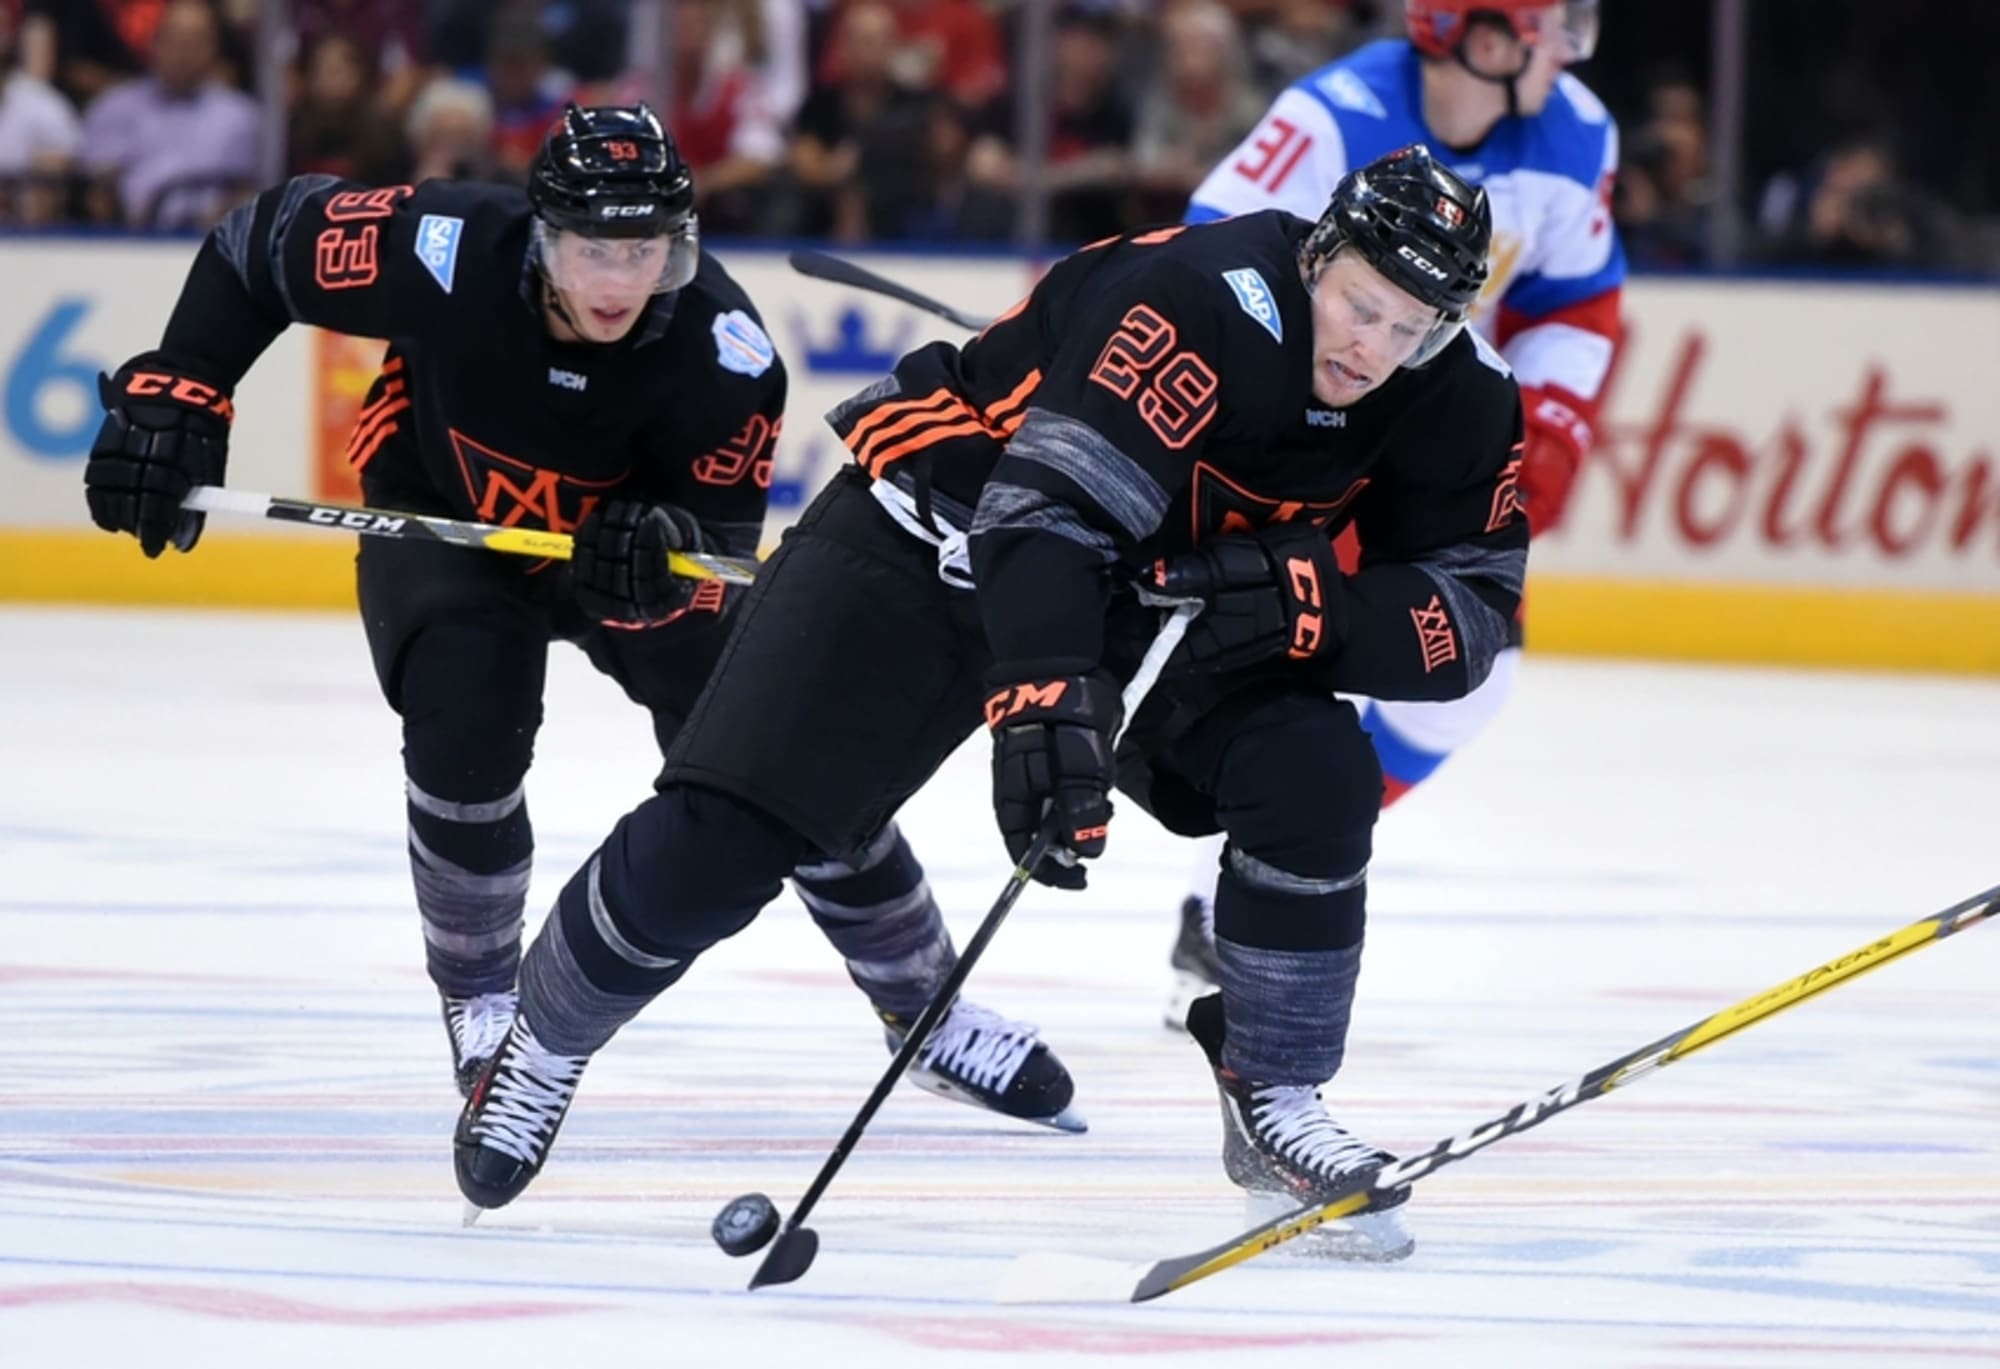 World Cup of Hockey – Team Europe vs. Team North America @ Bell Centre